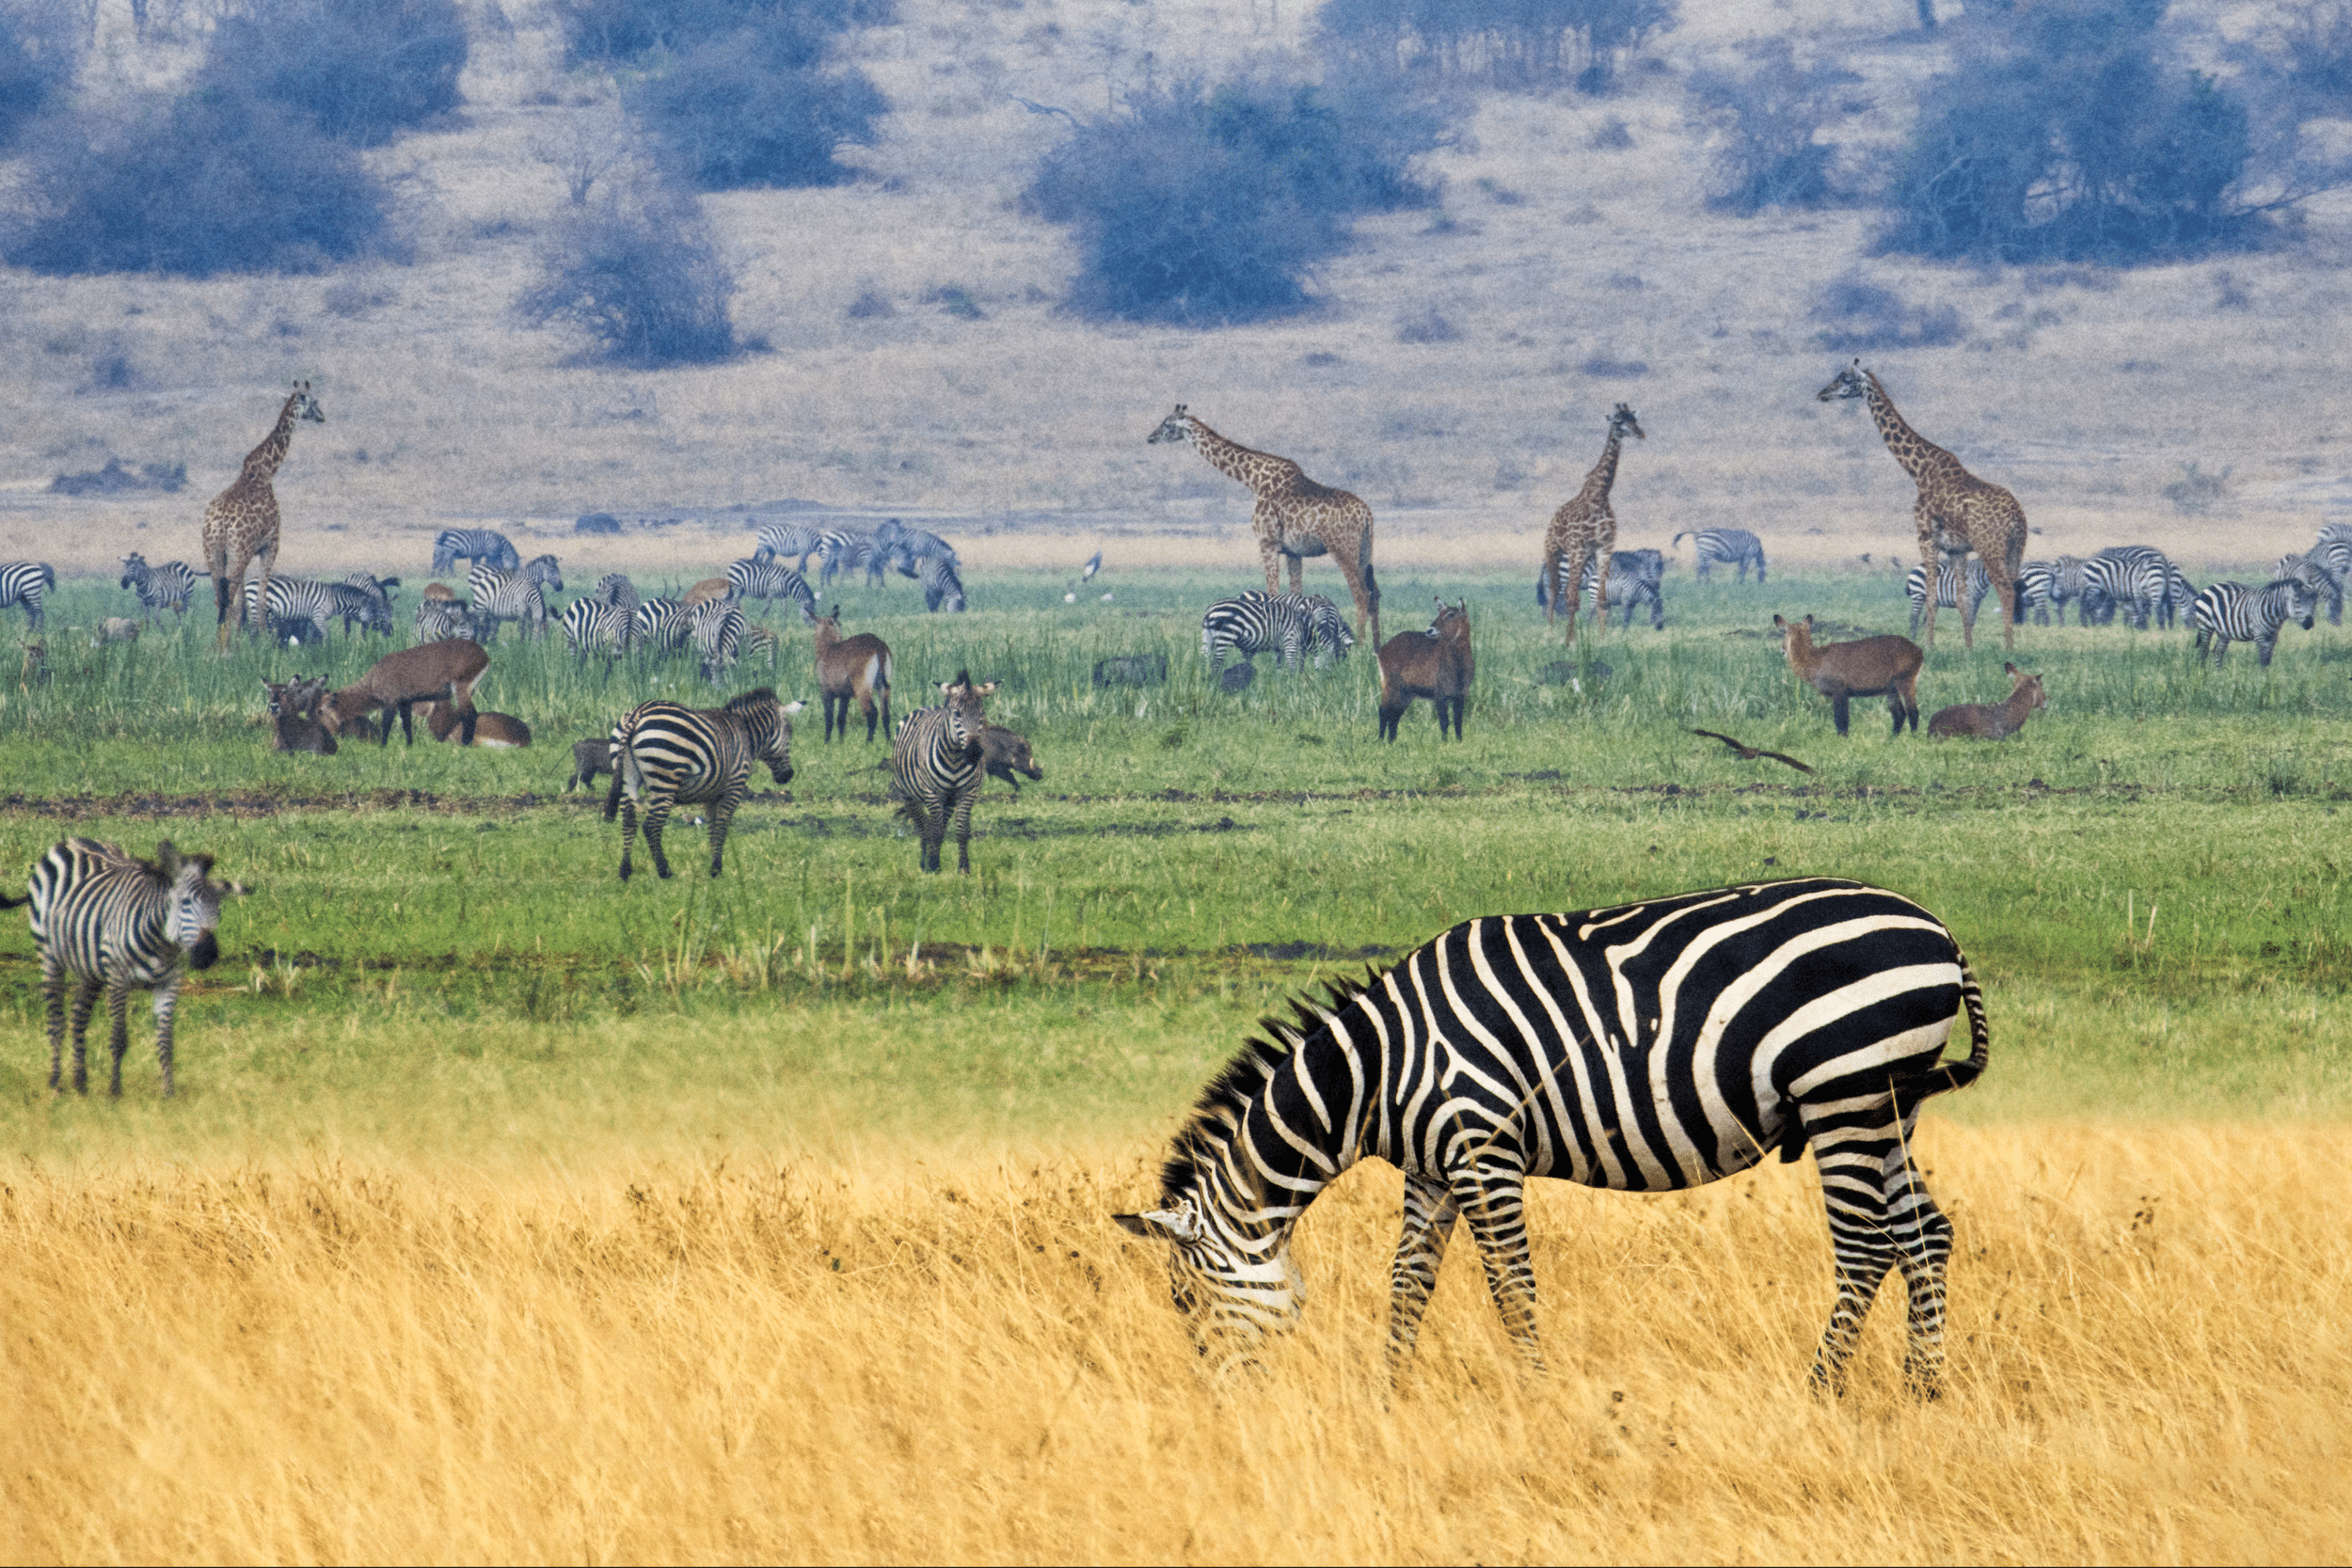 Zebras and giraffes graze in savannah